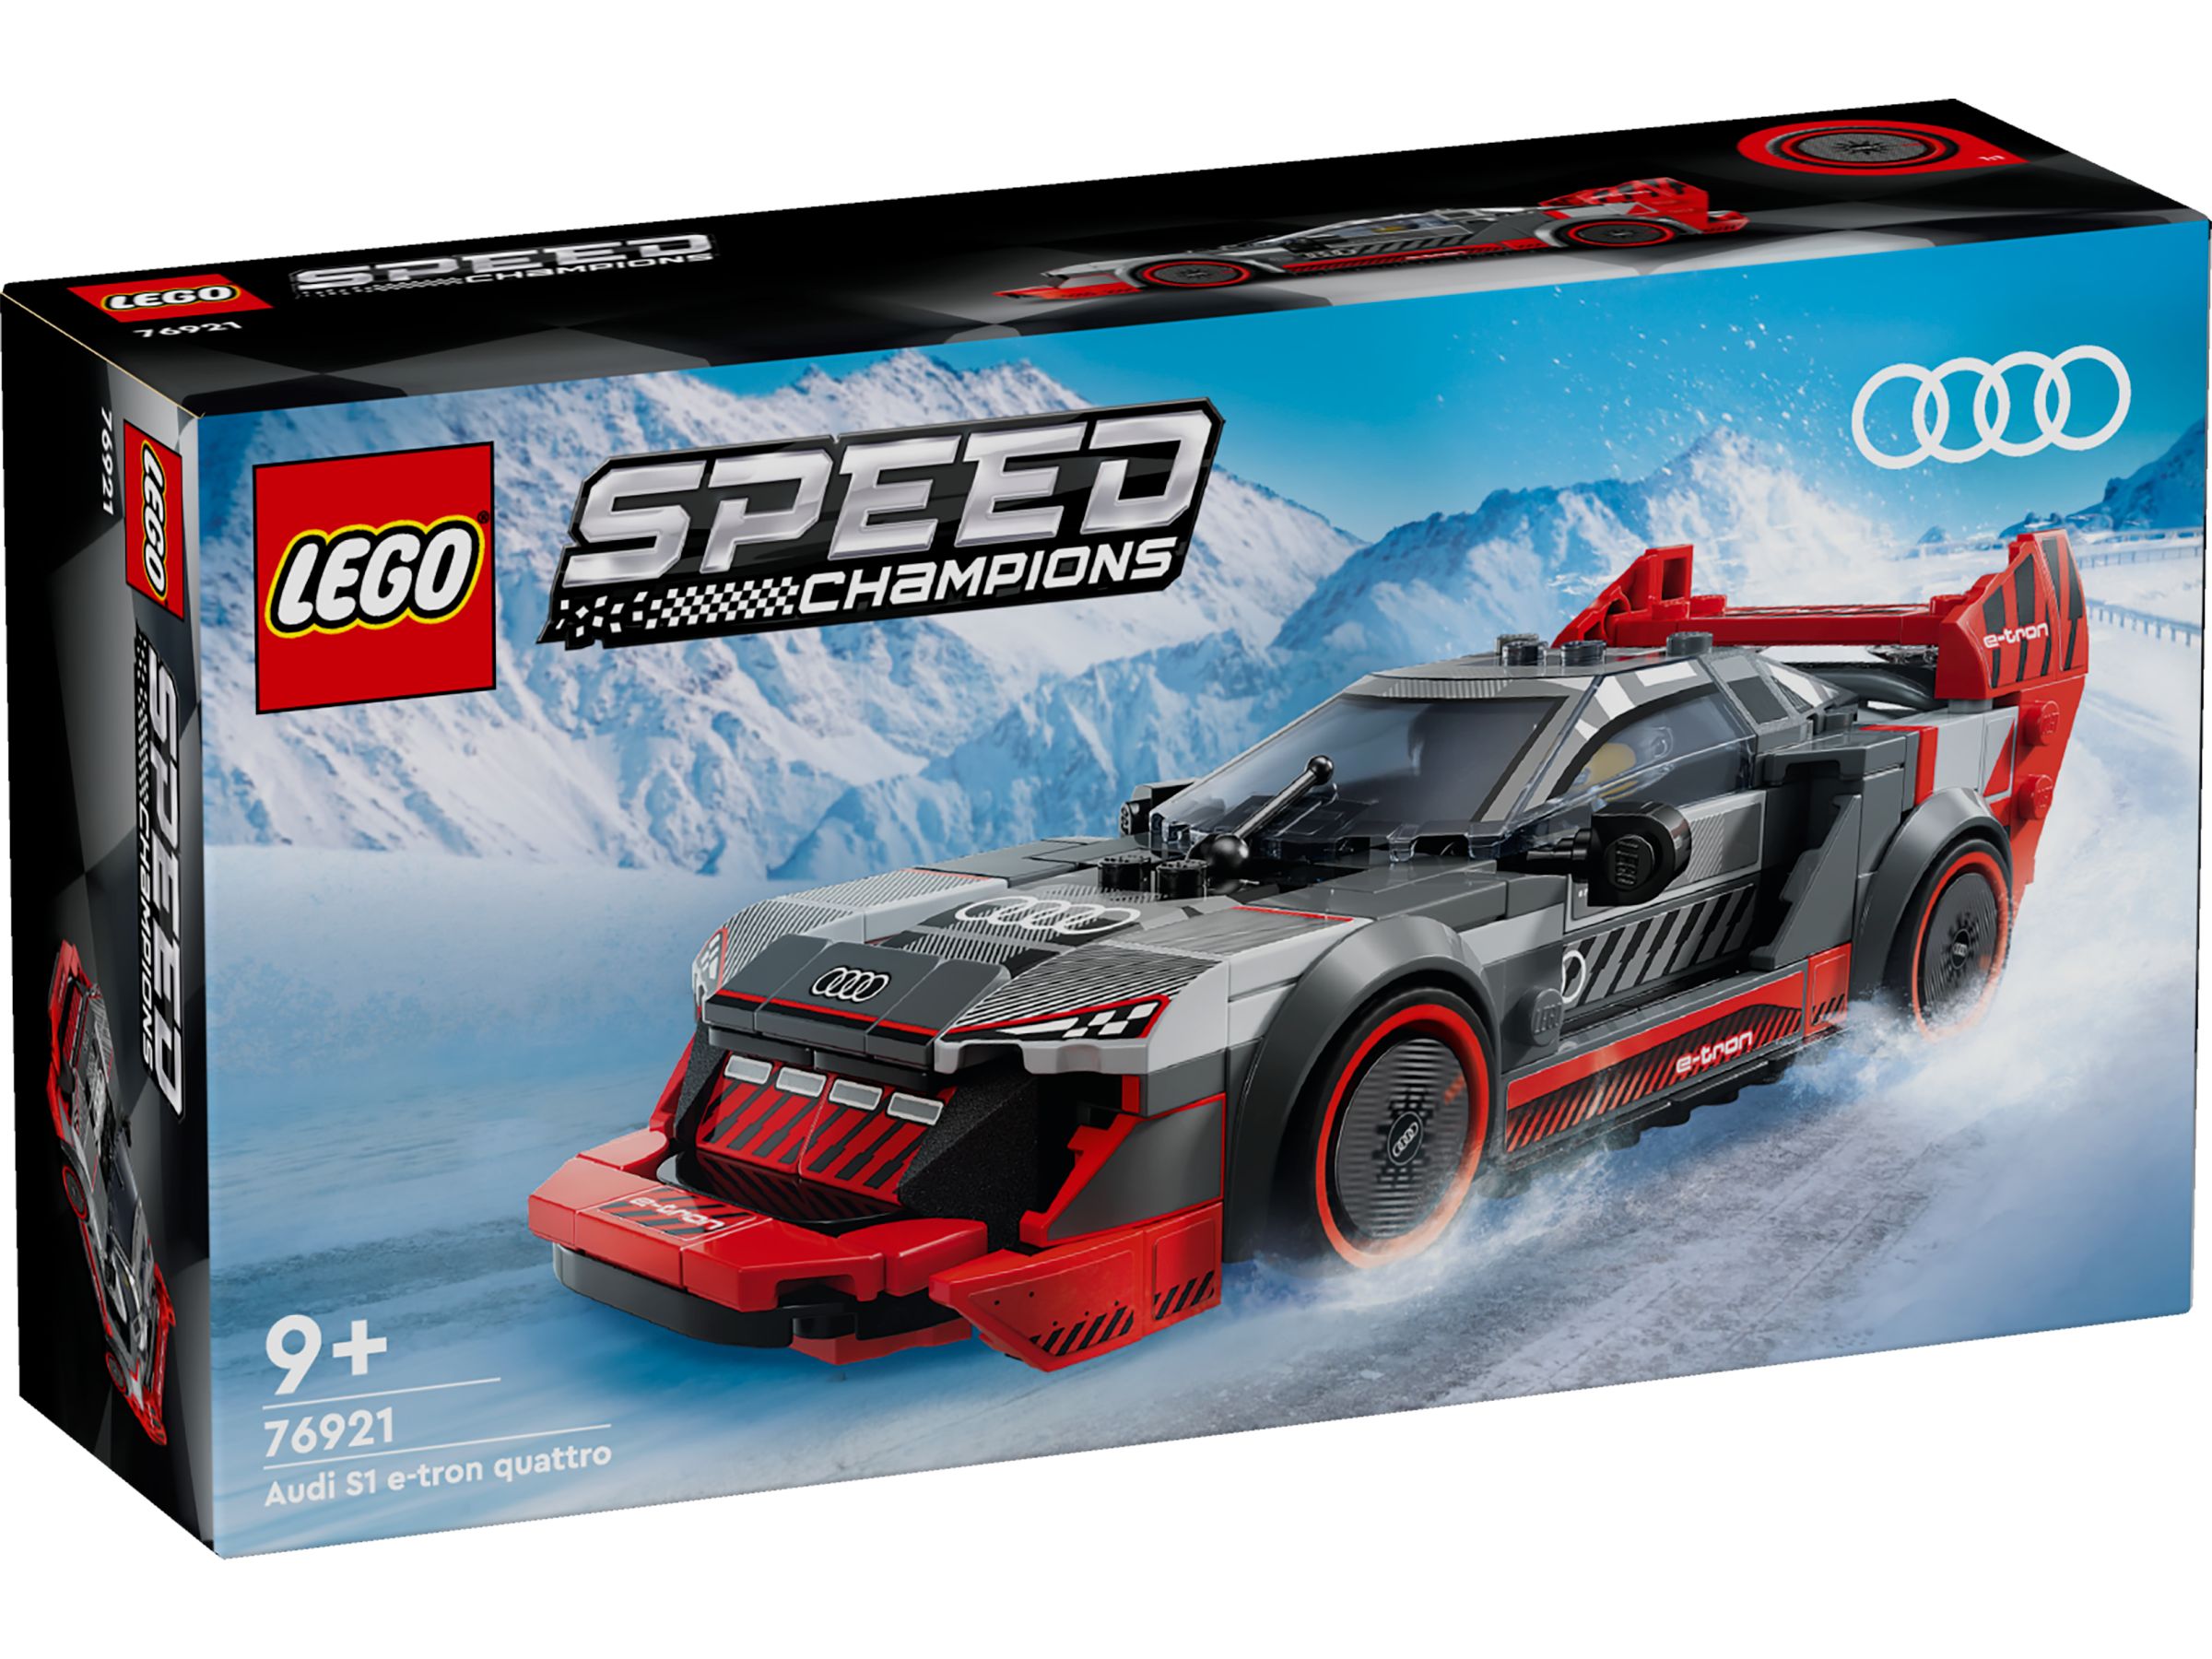 LEGO Speed Champions 76921 Audi S1 e-tron quattro Rennwagen LEGO_76921_Box1_v29.jpg